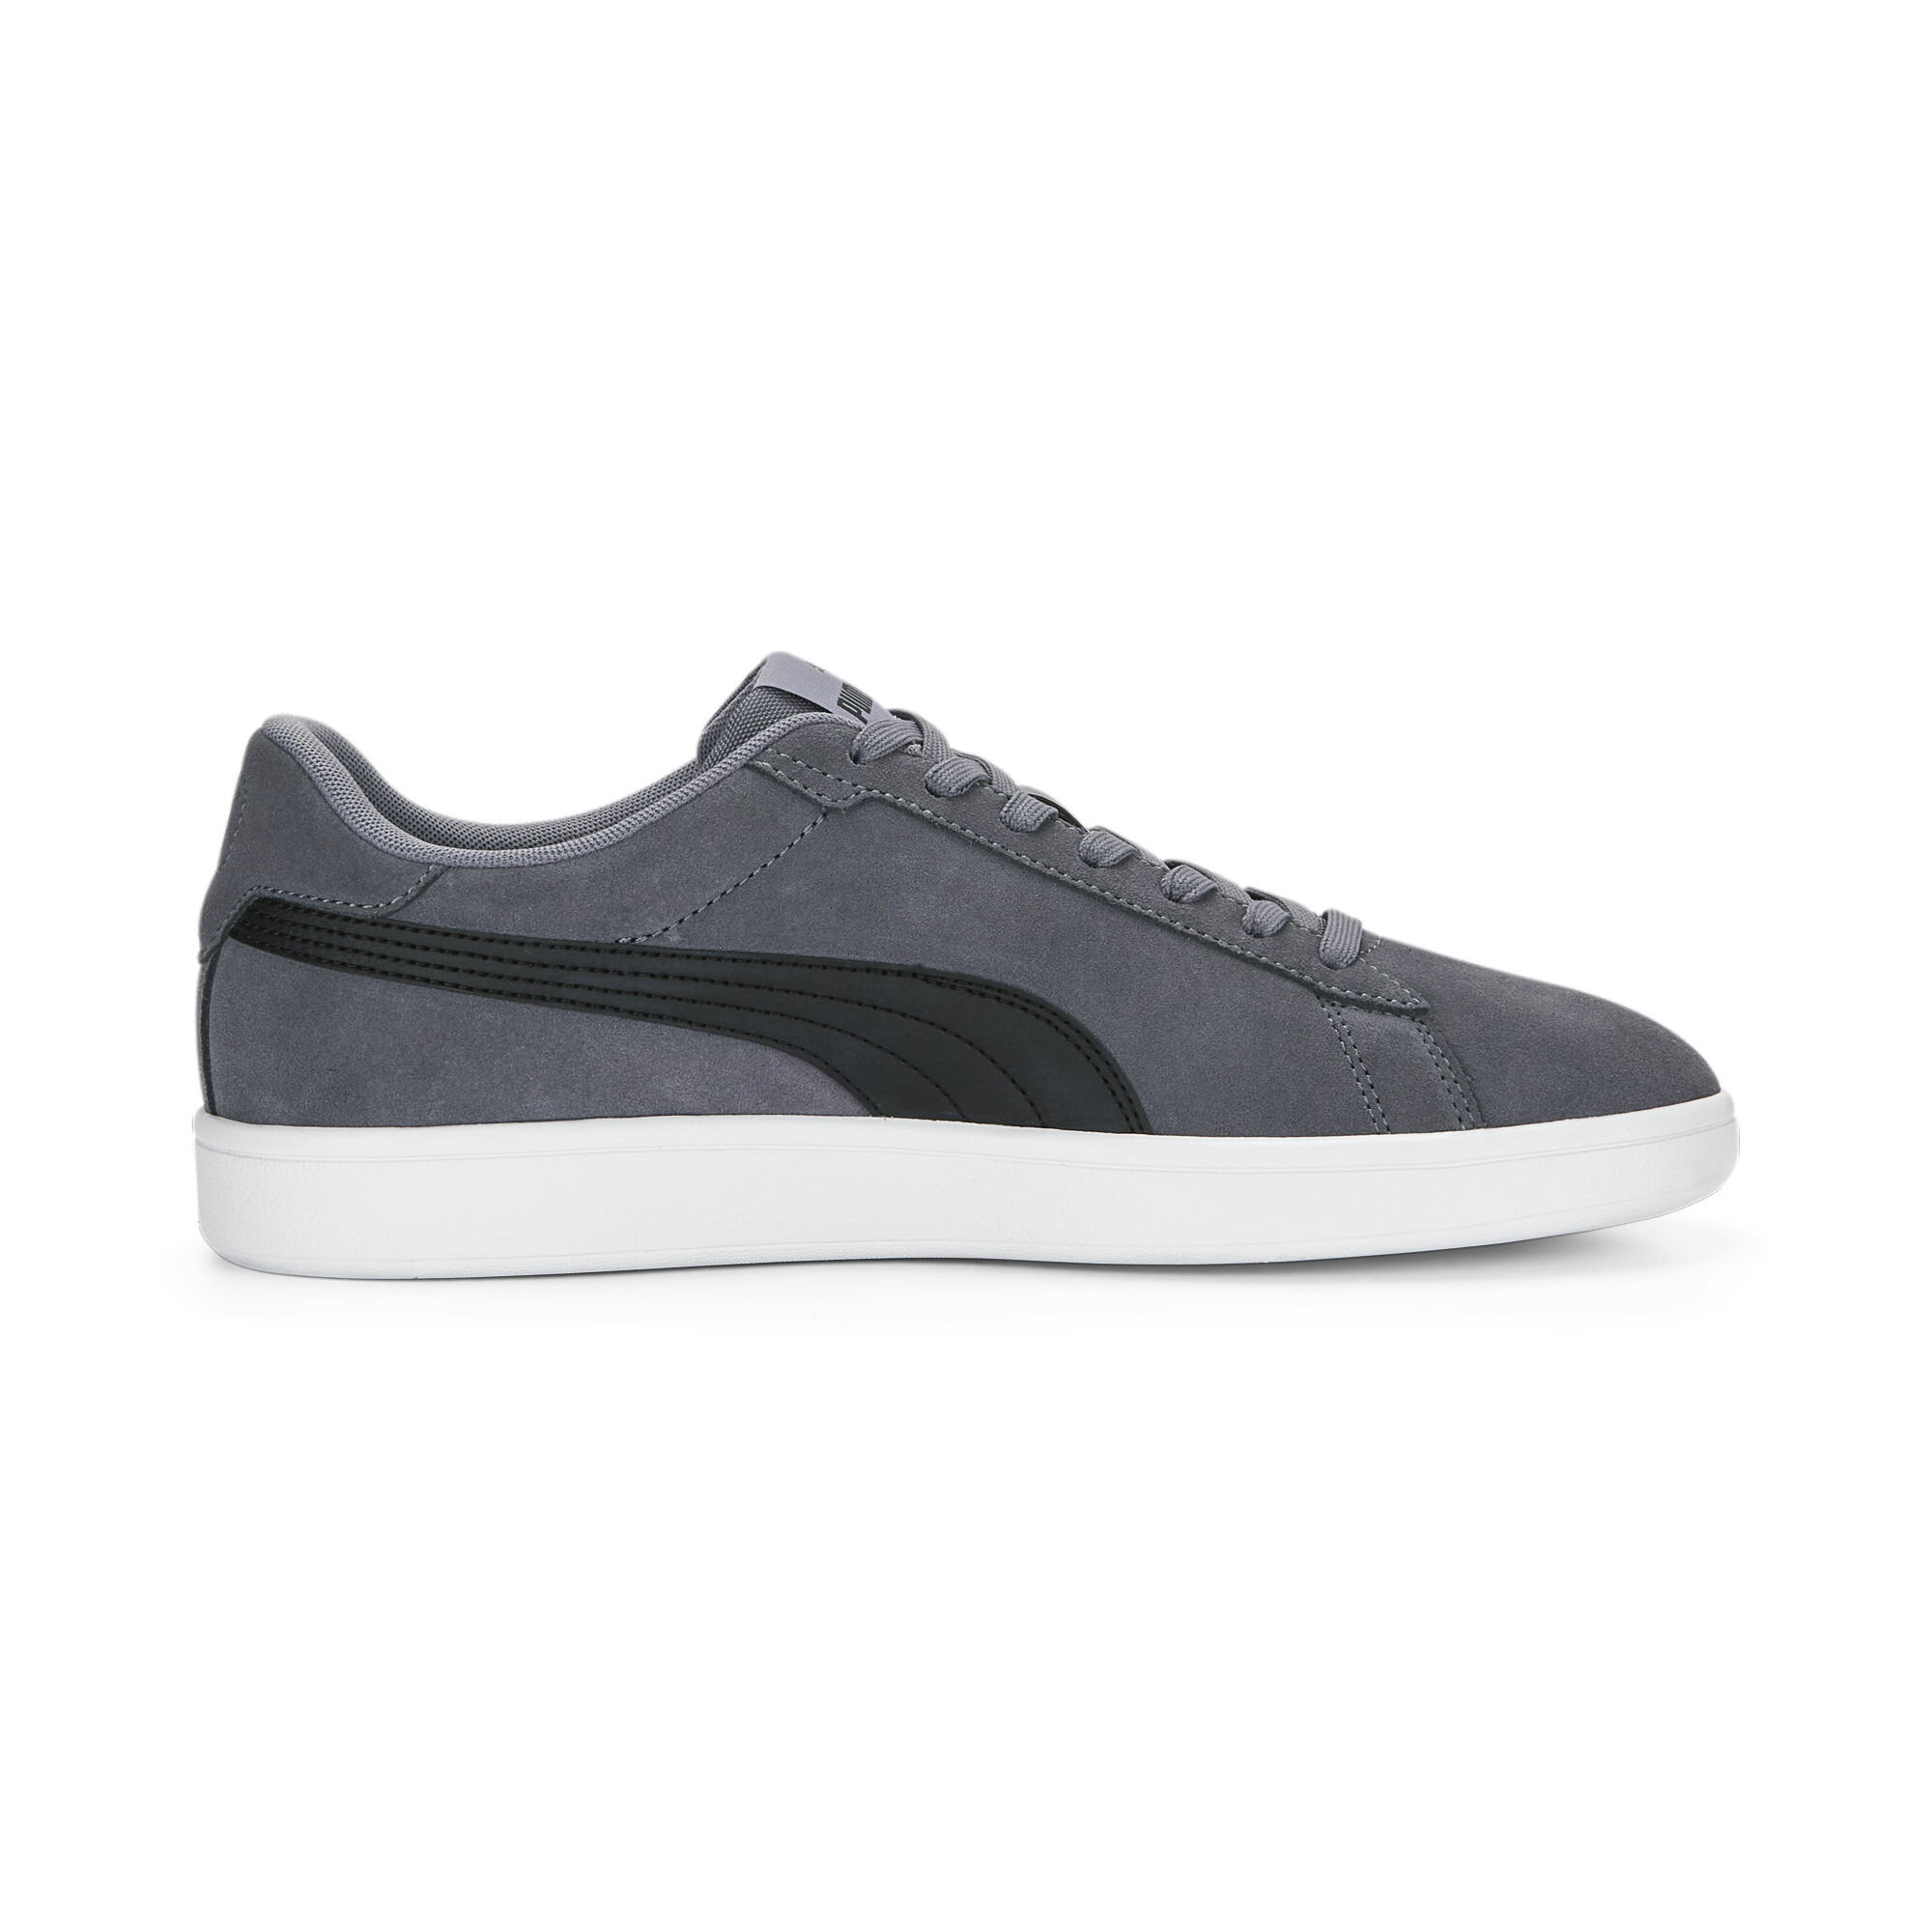 Puma Smash 3.0 Sneakers, Gray, Size 48, Shoes